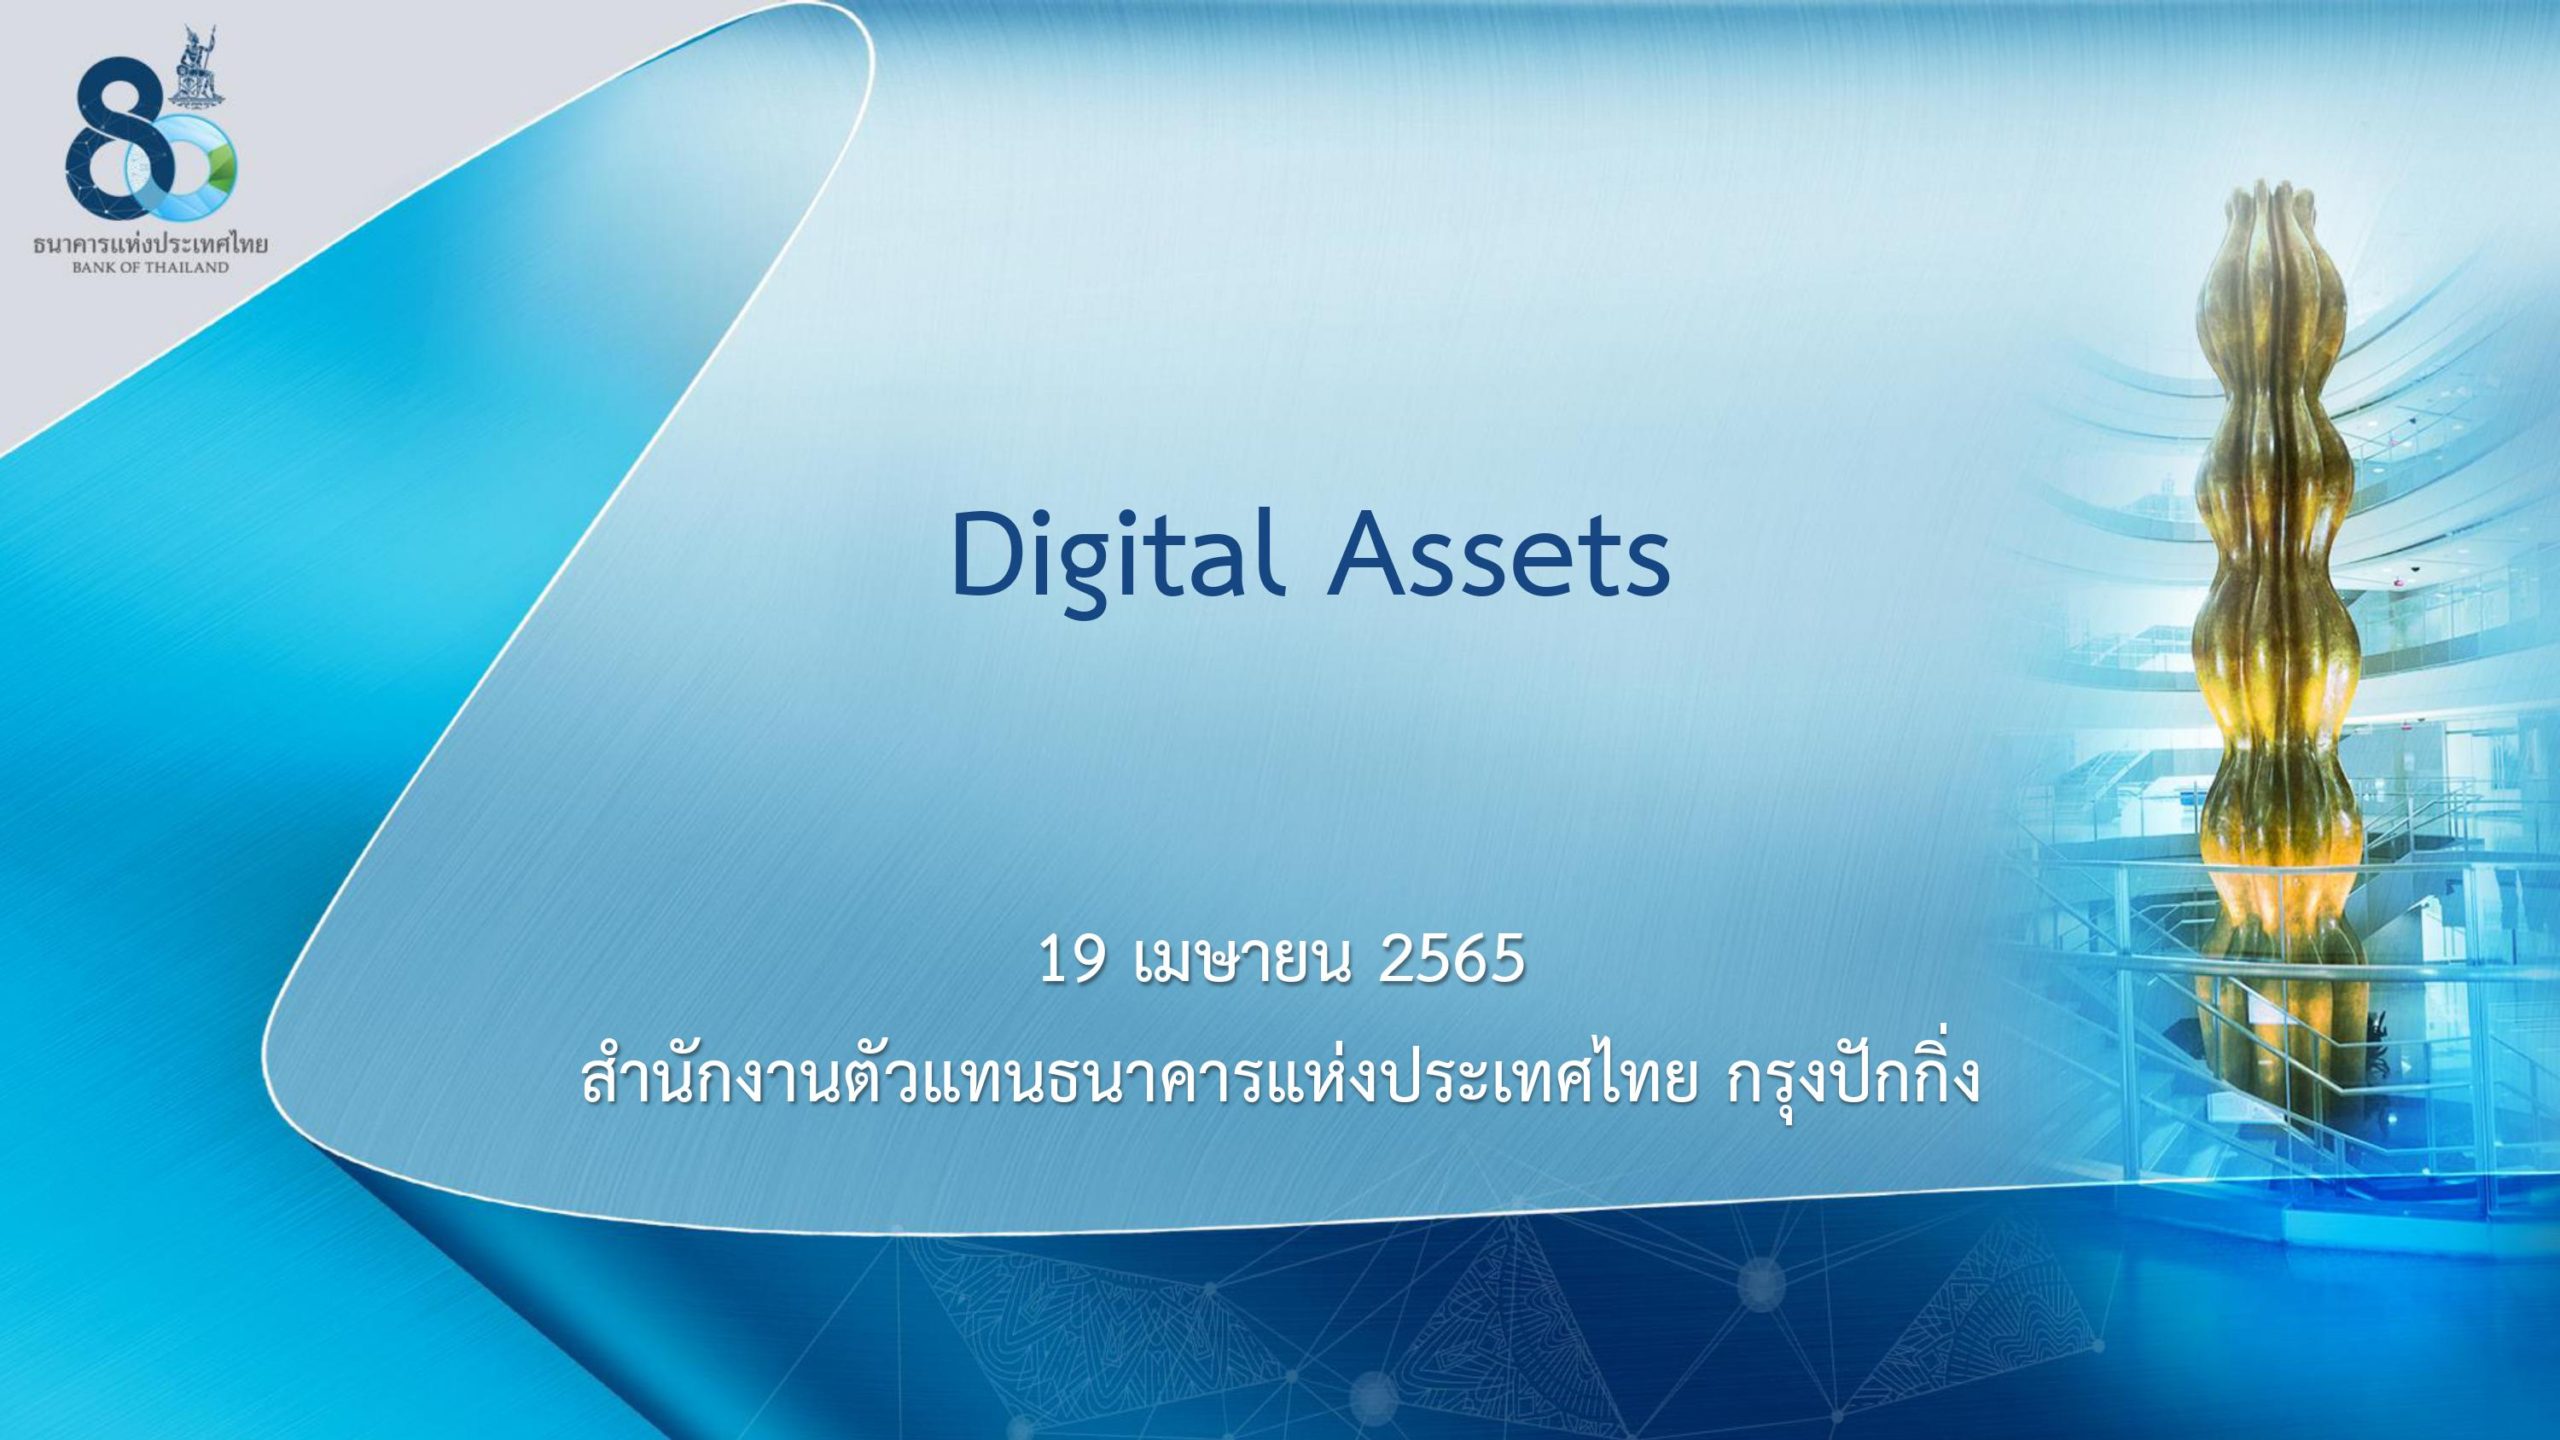 Digital Assets สำนักงานตัวแทนธนาคารแห่งประเทศไทย กรุงปักกิ่ง